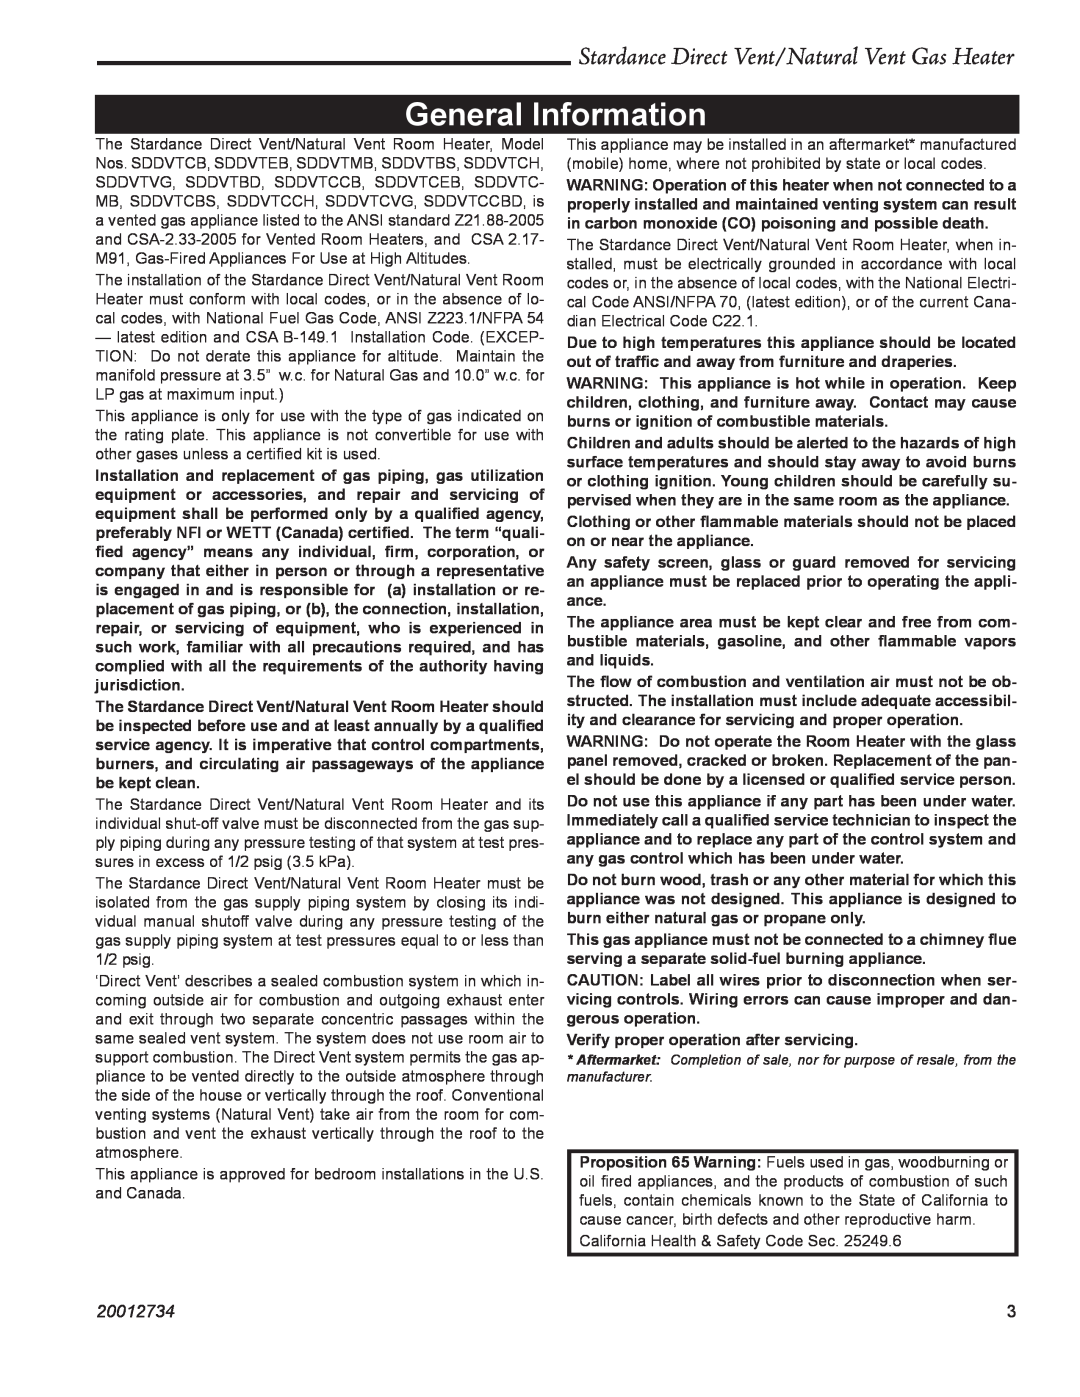 Vermont Casting SDDVTCVG, SDDVTCMB manual General Information, Stardance Direct Vent/Natural Vent Gas Heater, 20012734 